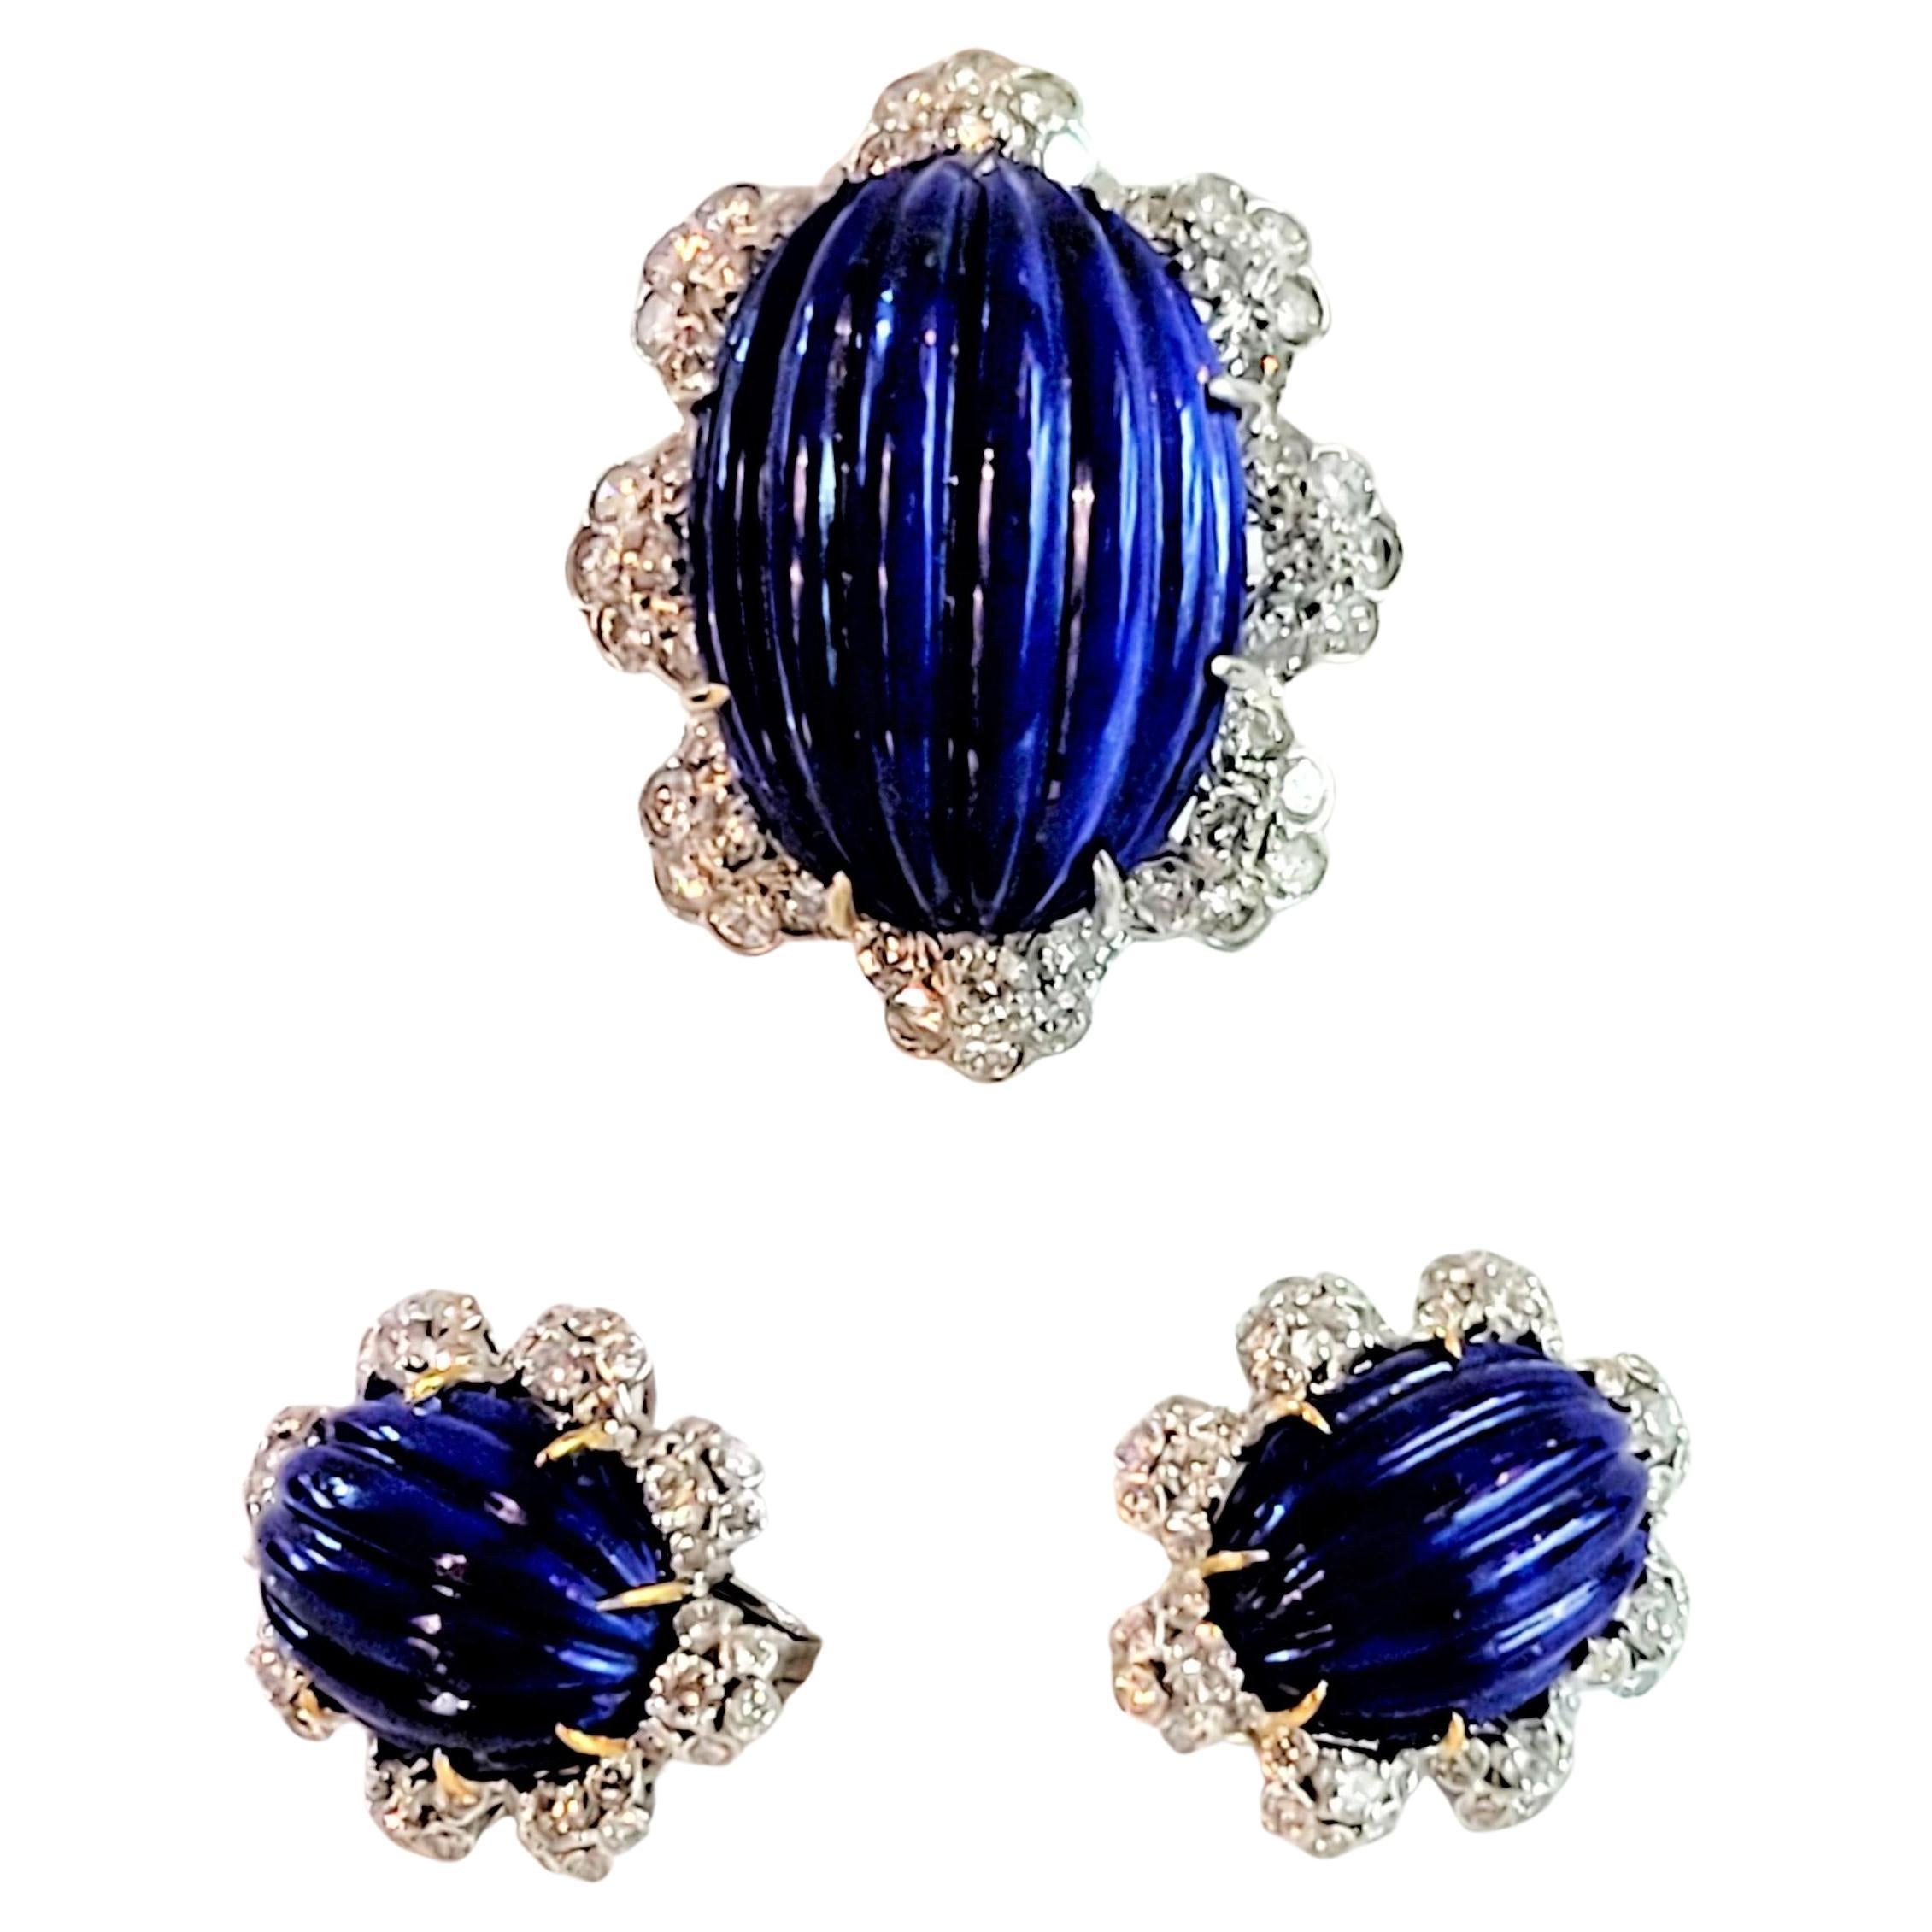 Unique Diamond Lapis Lazuli Ring & Earrings in Gold